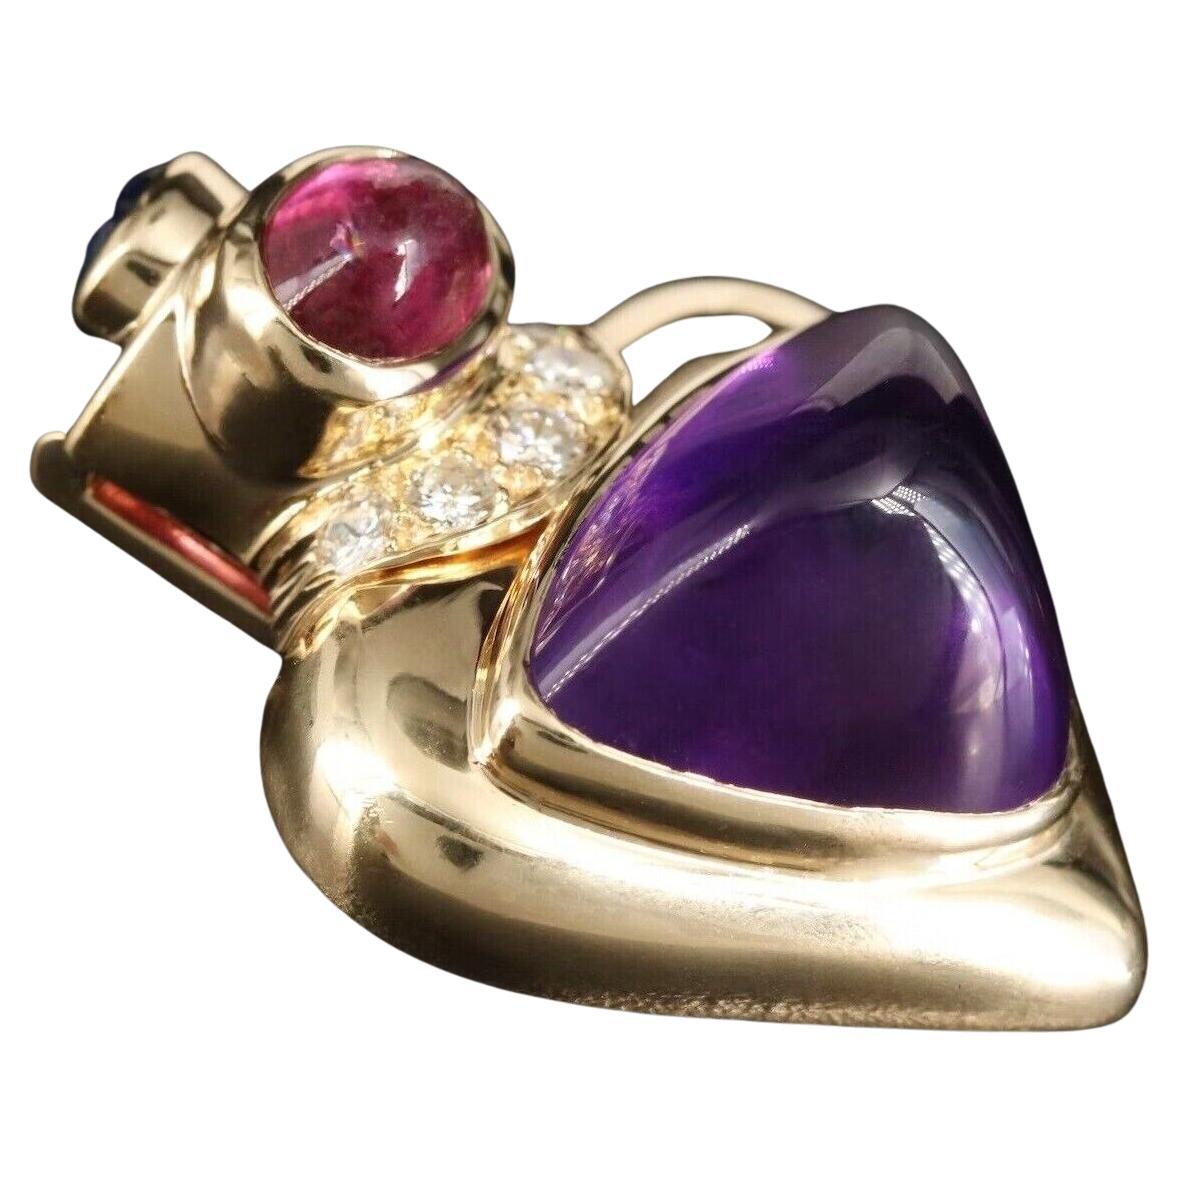 $12500 / Lagos Heart Pendant Brooch /Massive Diamond & Gemstone / 14K